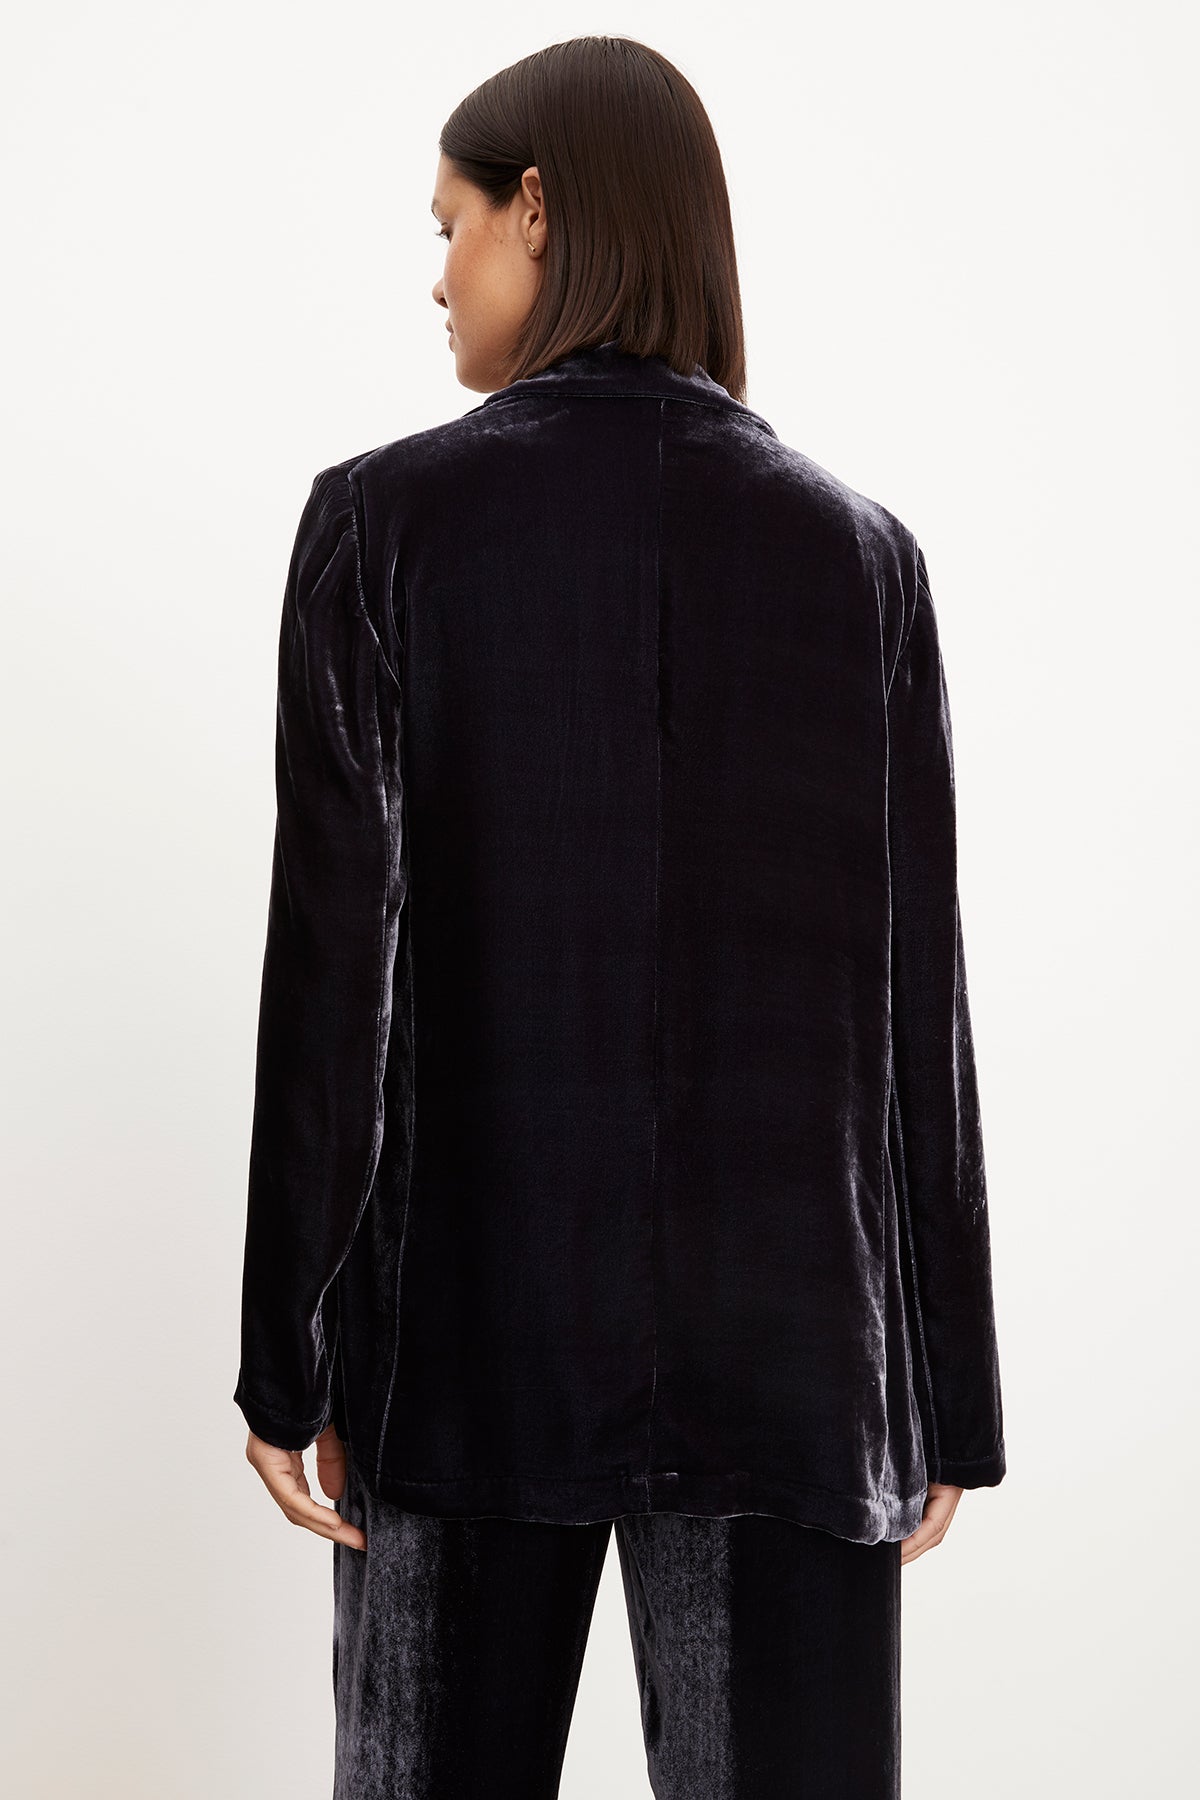 The back view of a person wearing an oversized fit KYLA SILK VELVET BLAZER by Velvet by Graham & Spencer.-35577747996865